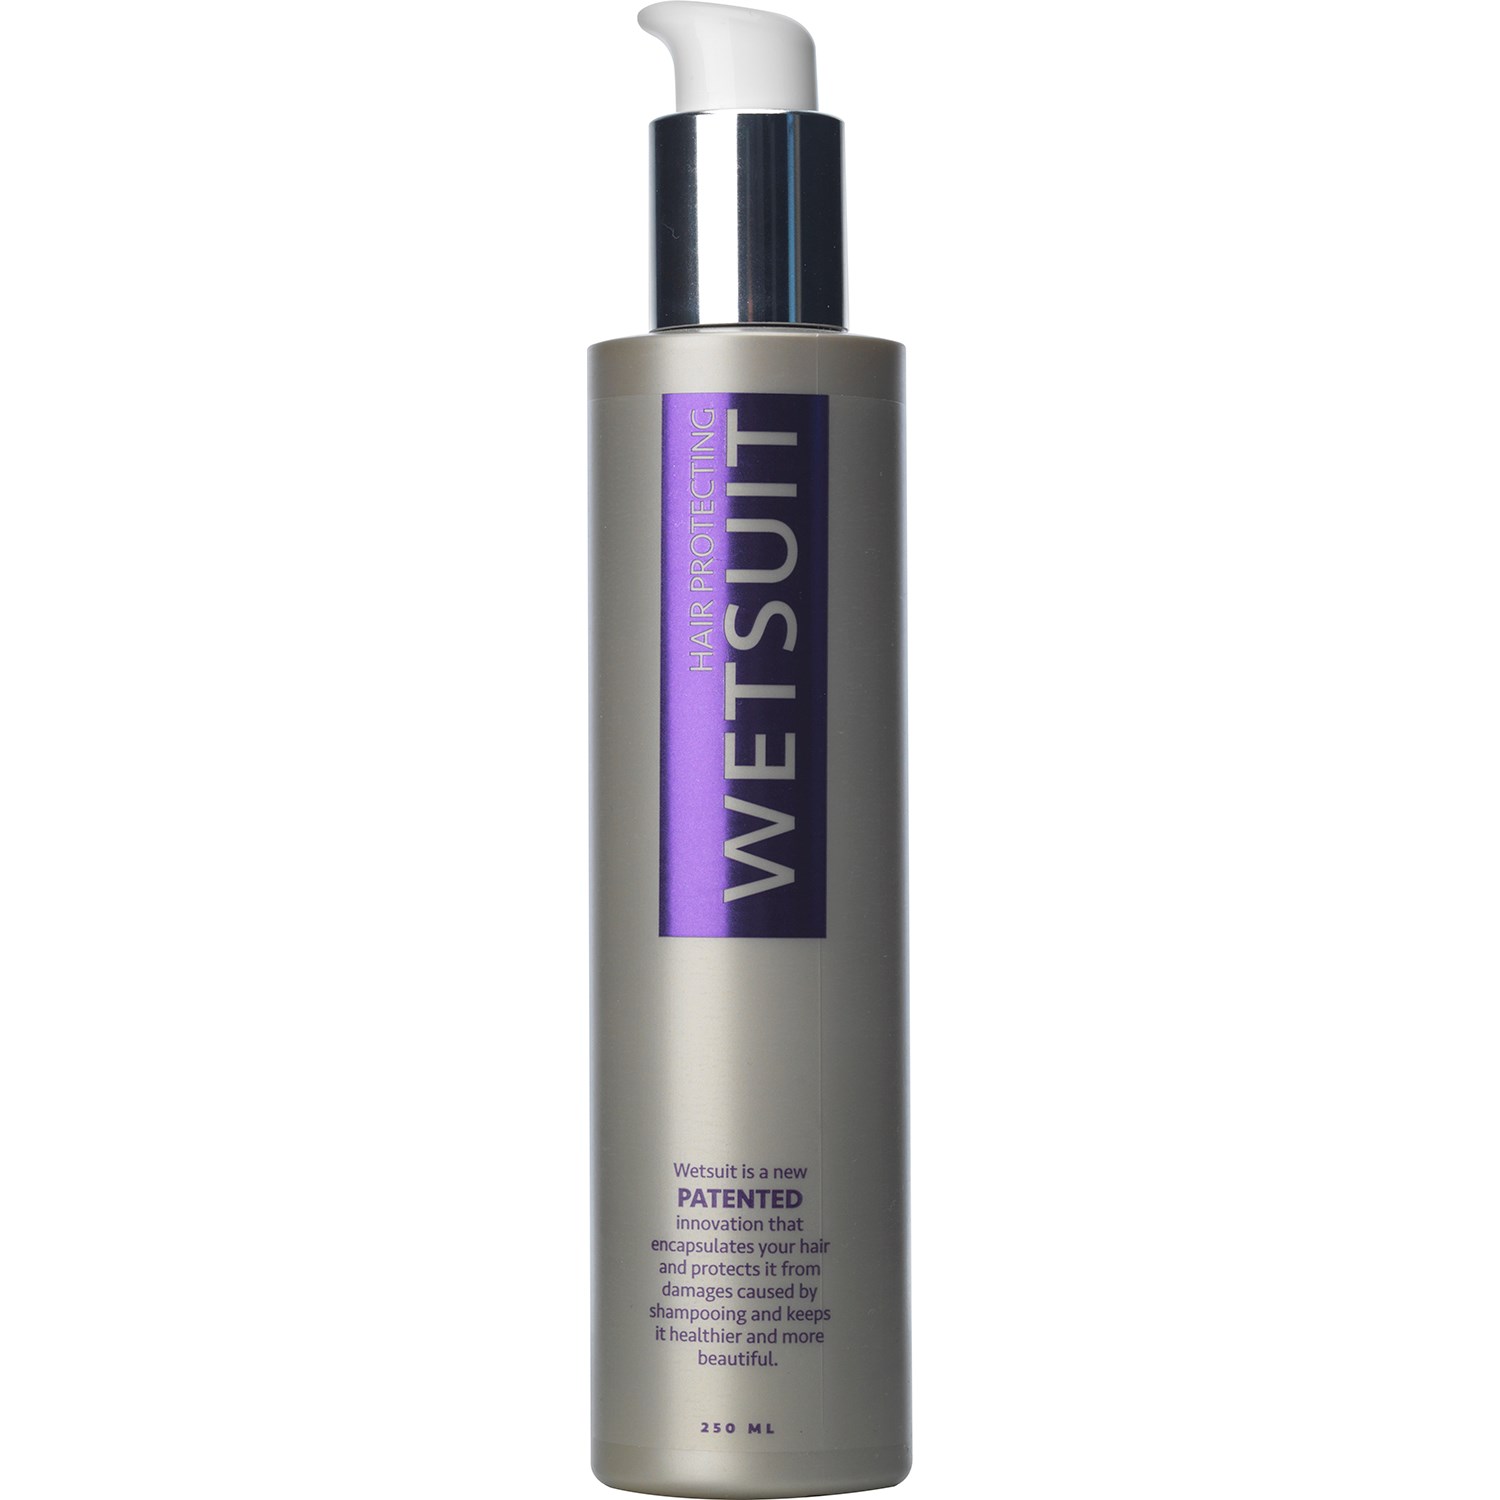 Läs mer om Wetsuit Hair Protecting New Patented 250 ml